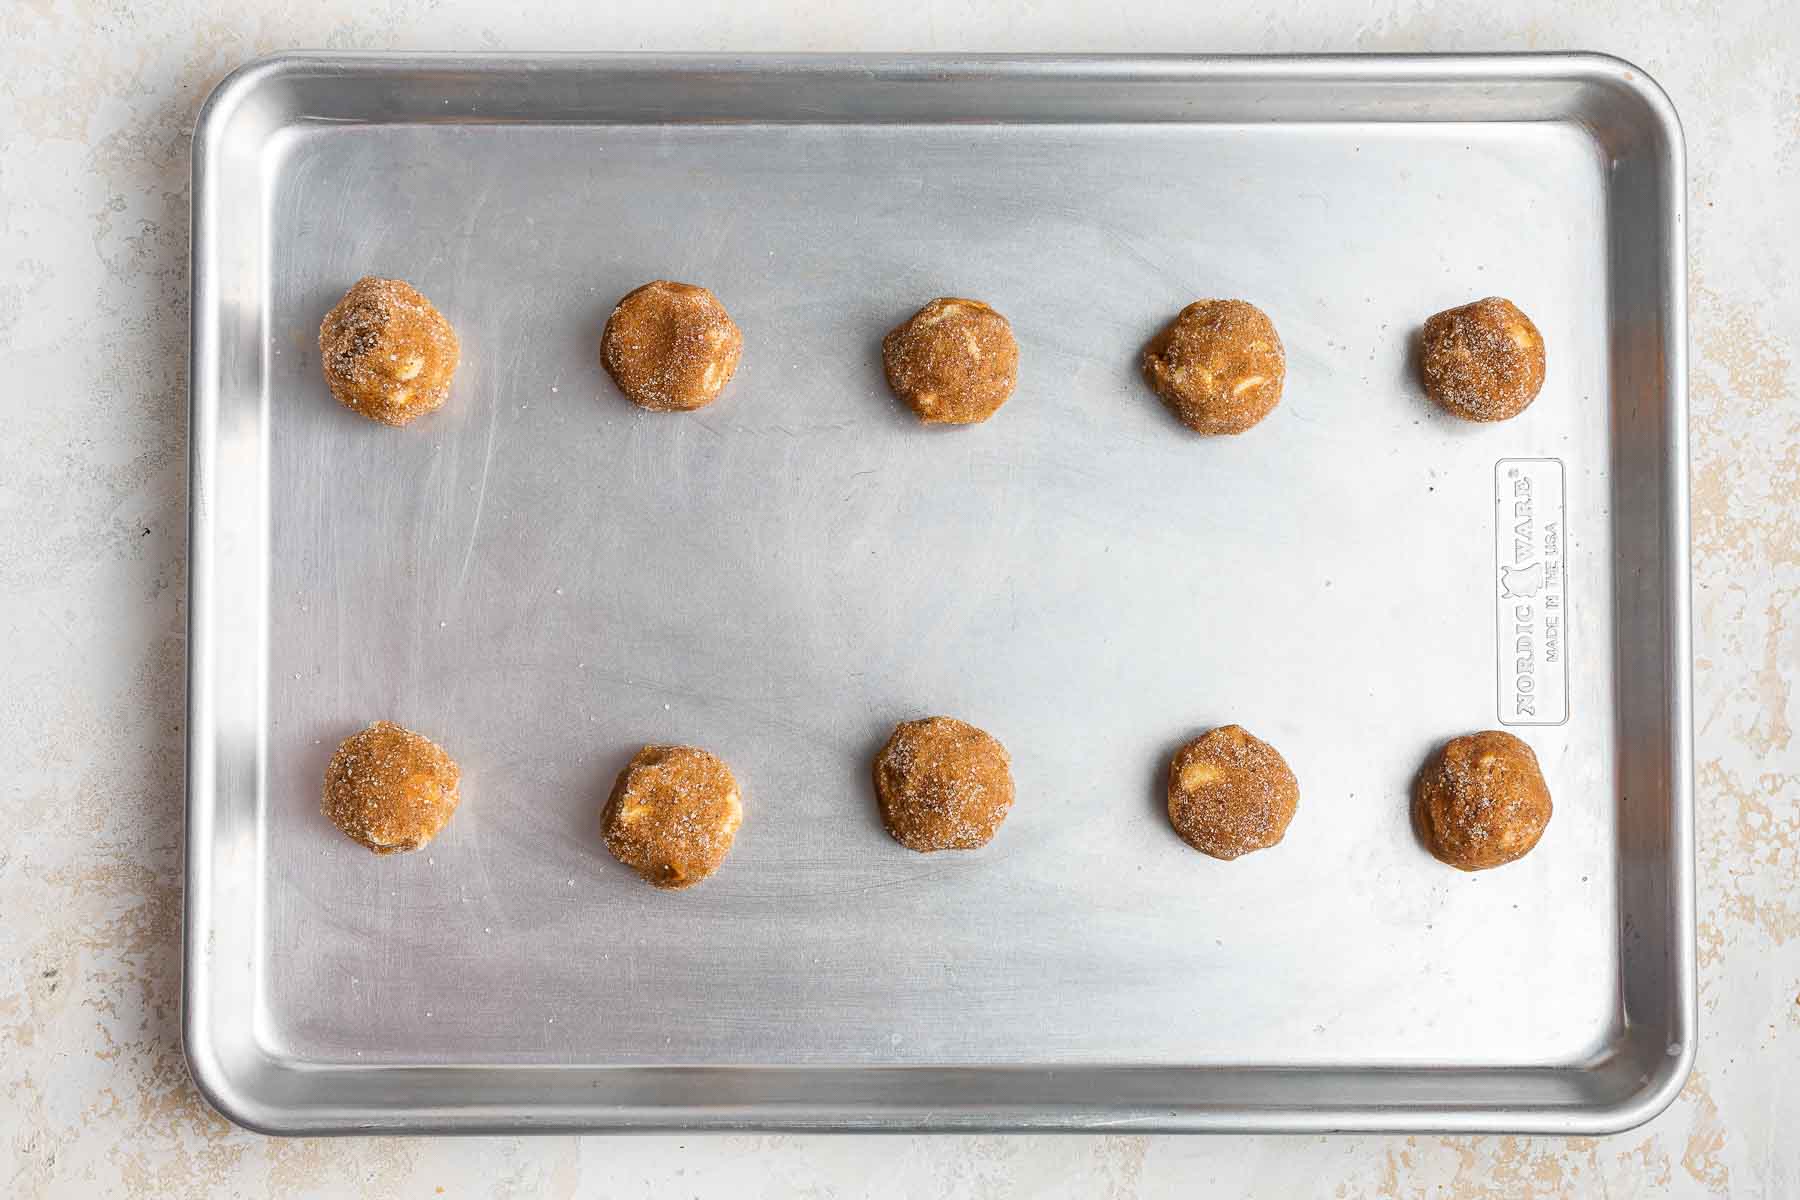 Ten pumpkin white chocolate chip cookies dough balls on silver baking sheet.